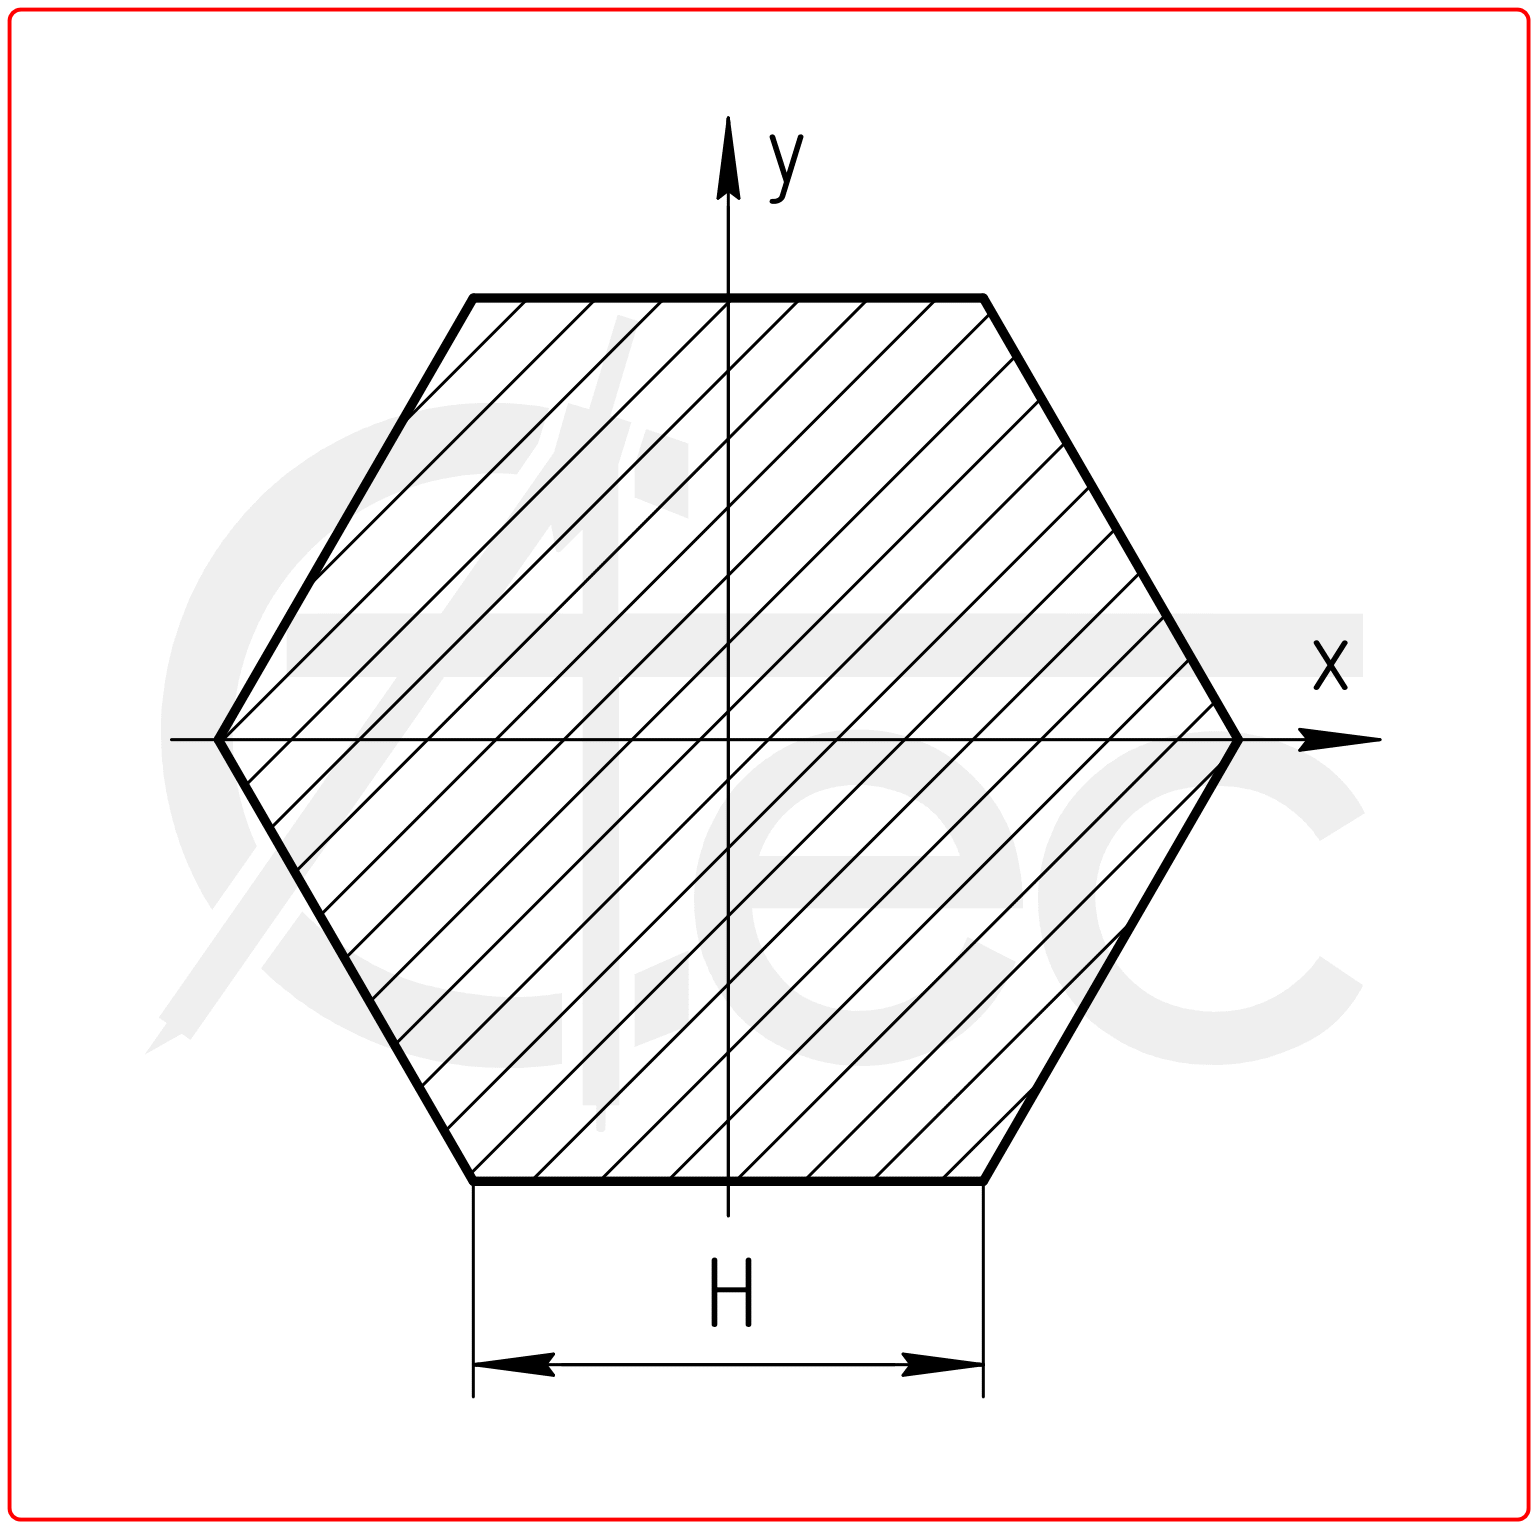 Calculation of Moment of inertia of hexagon